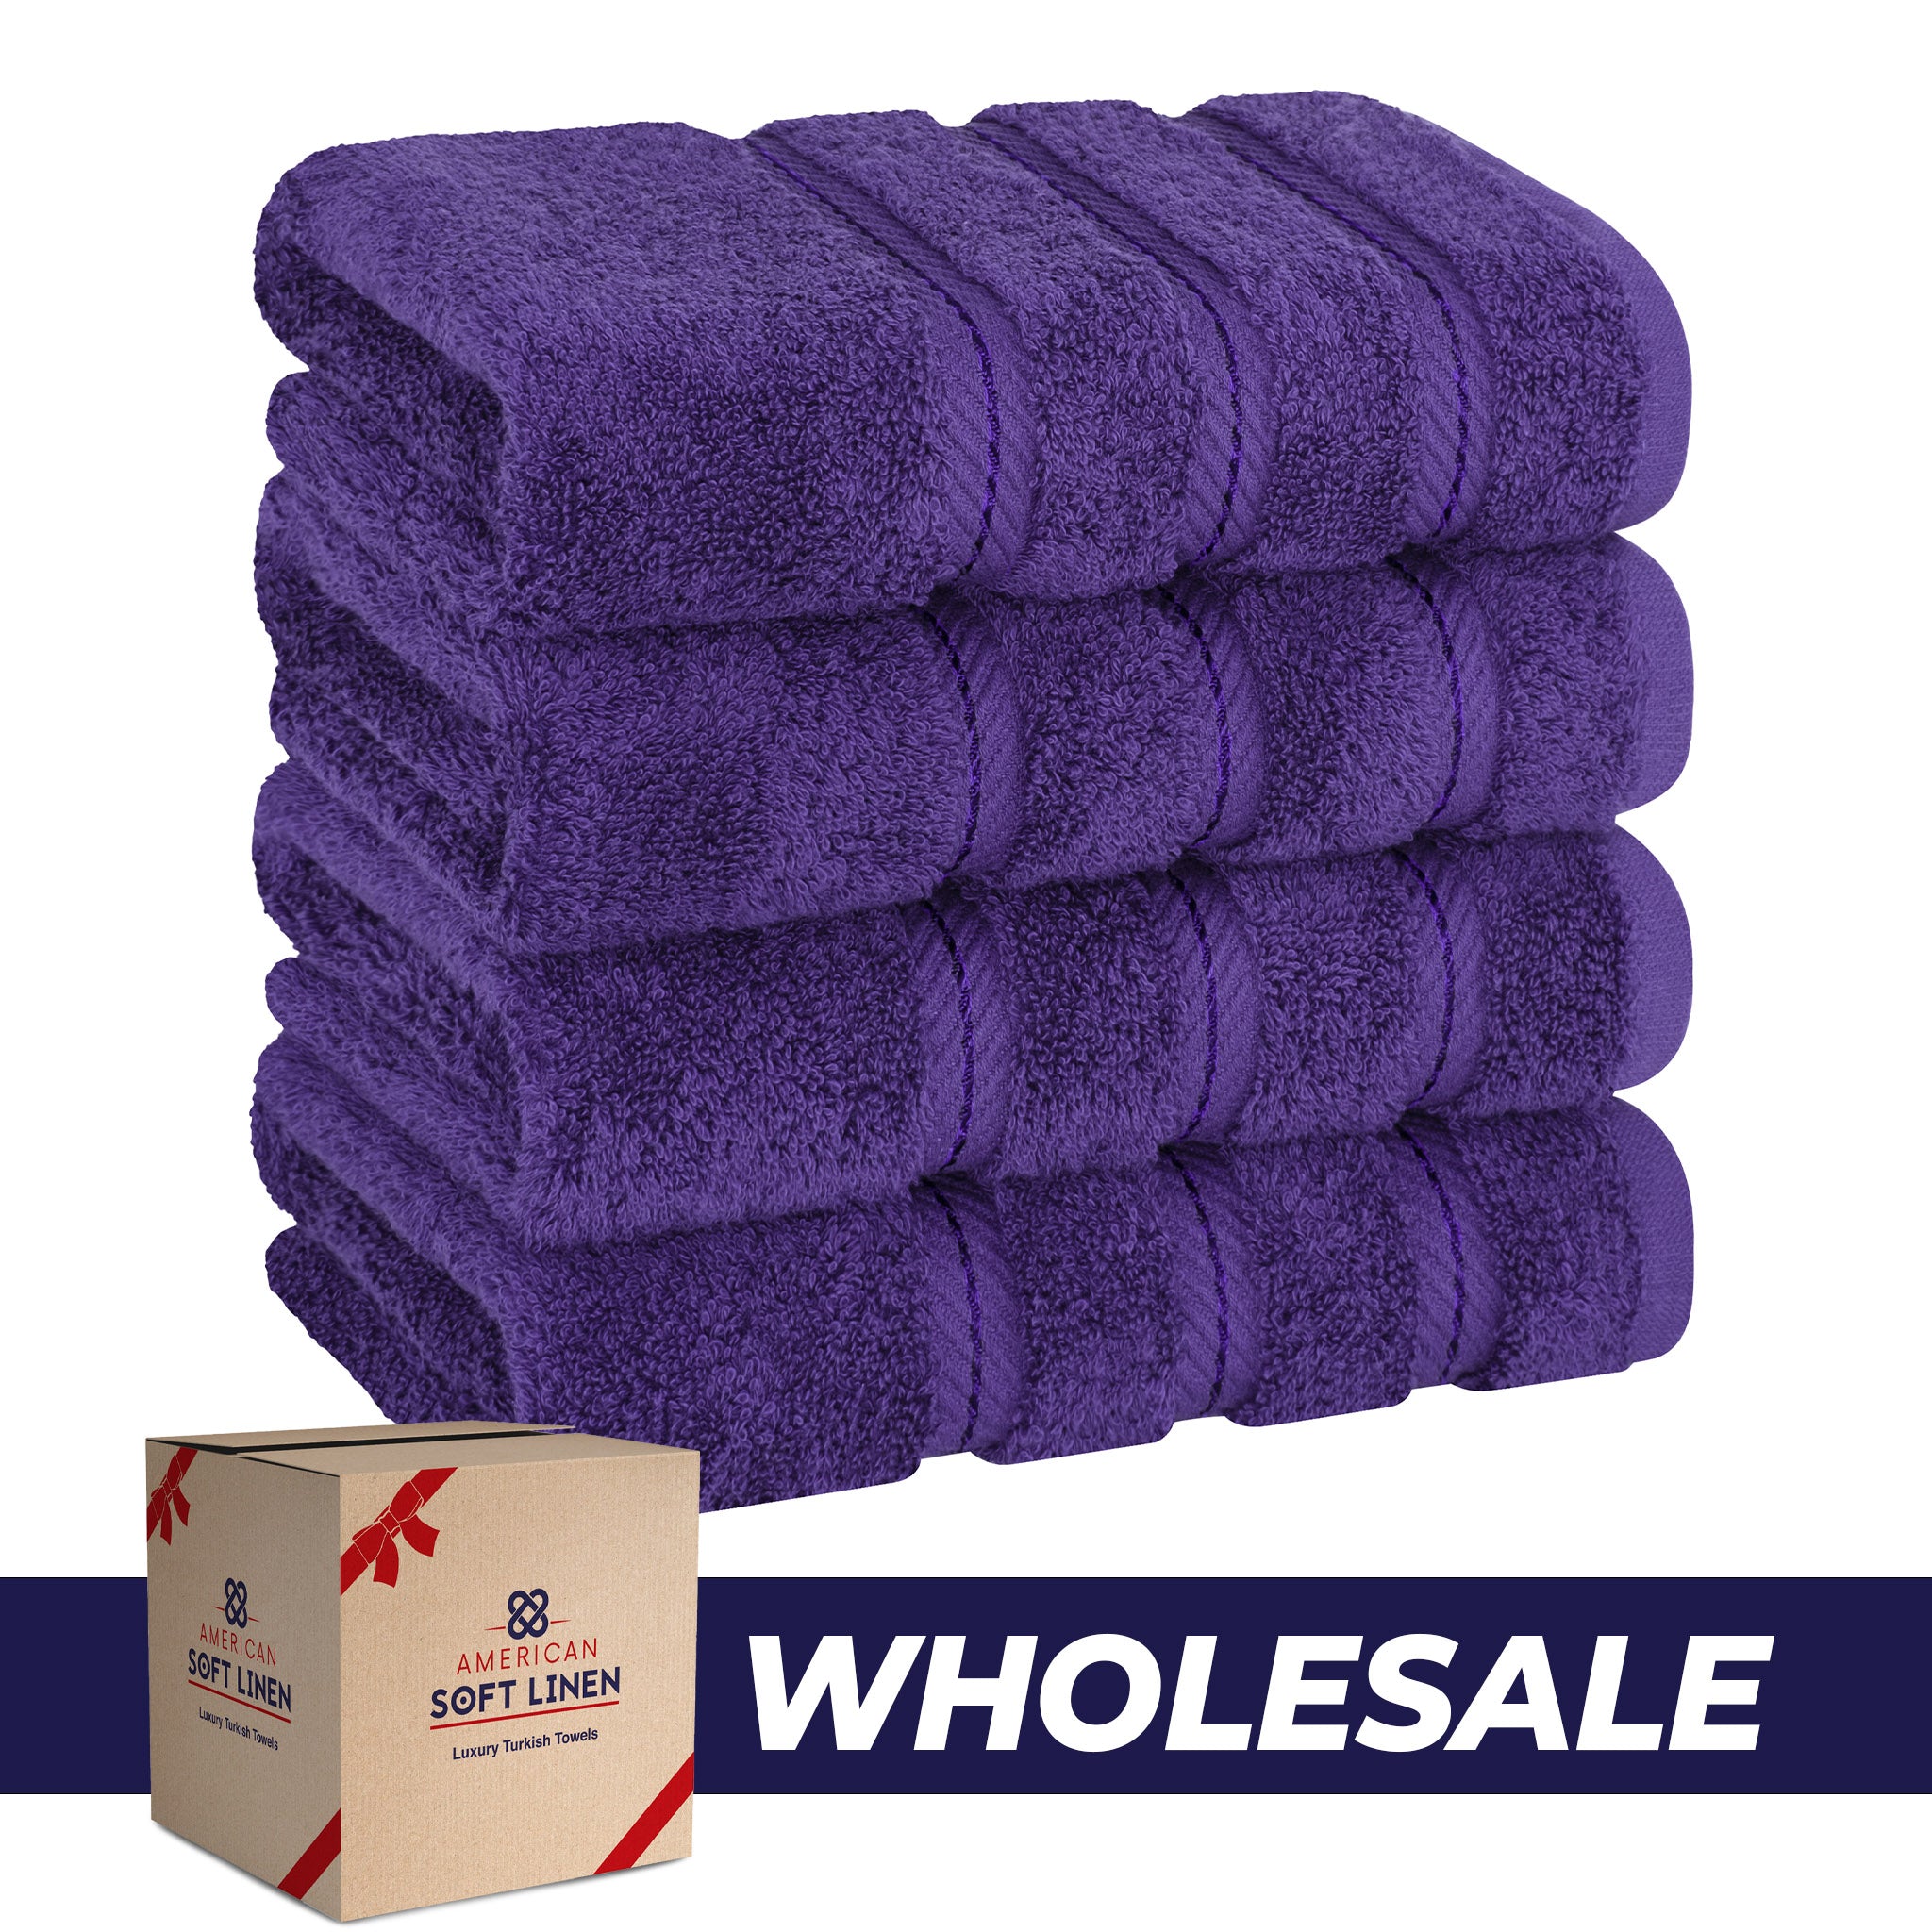 American Soft Linen 100% Turkish Cotton 4 Pack Hand Towel Set Wholesale purple-0